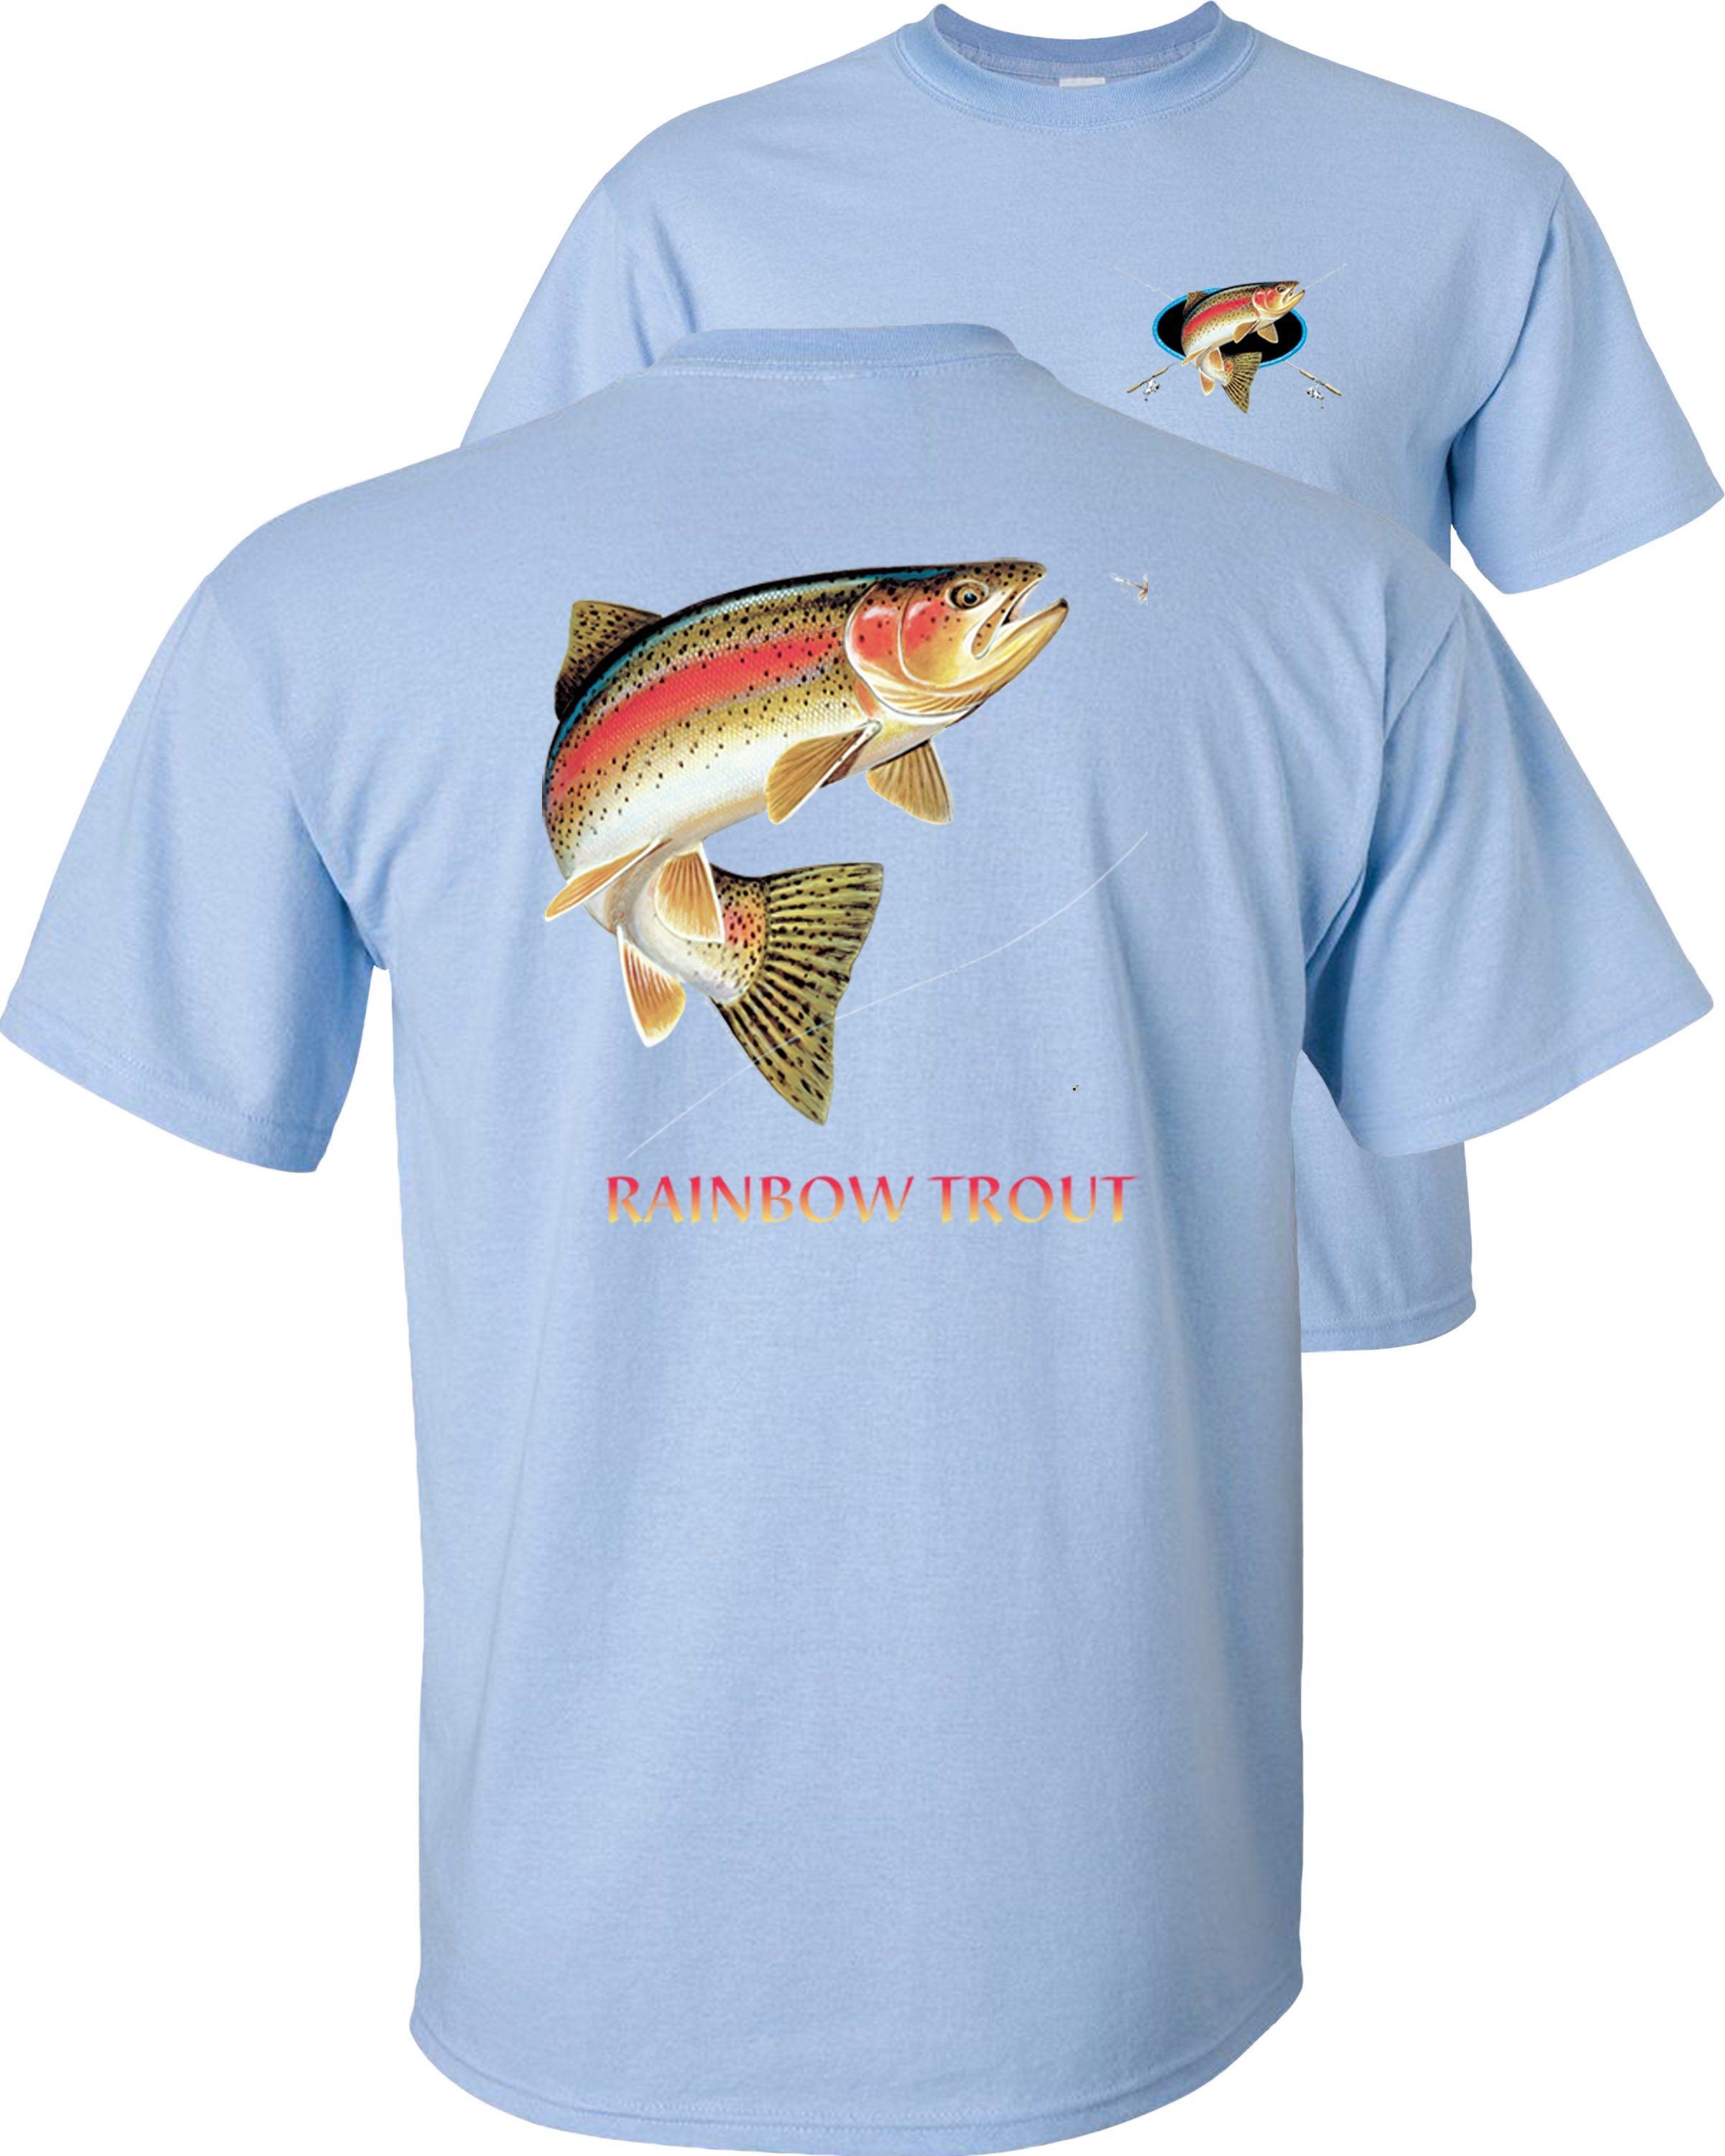 Rainbow Trout Fishing T-shirt, Profile S-5X 